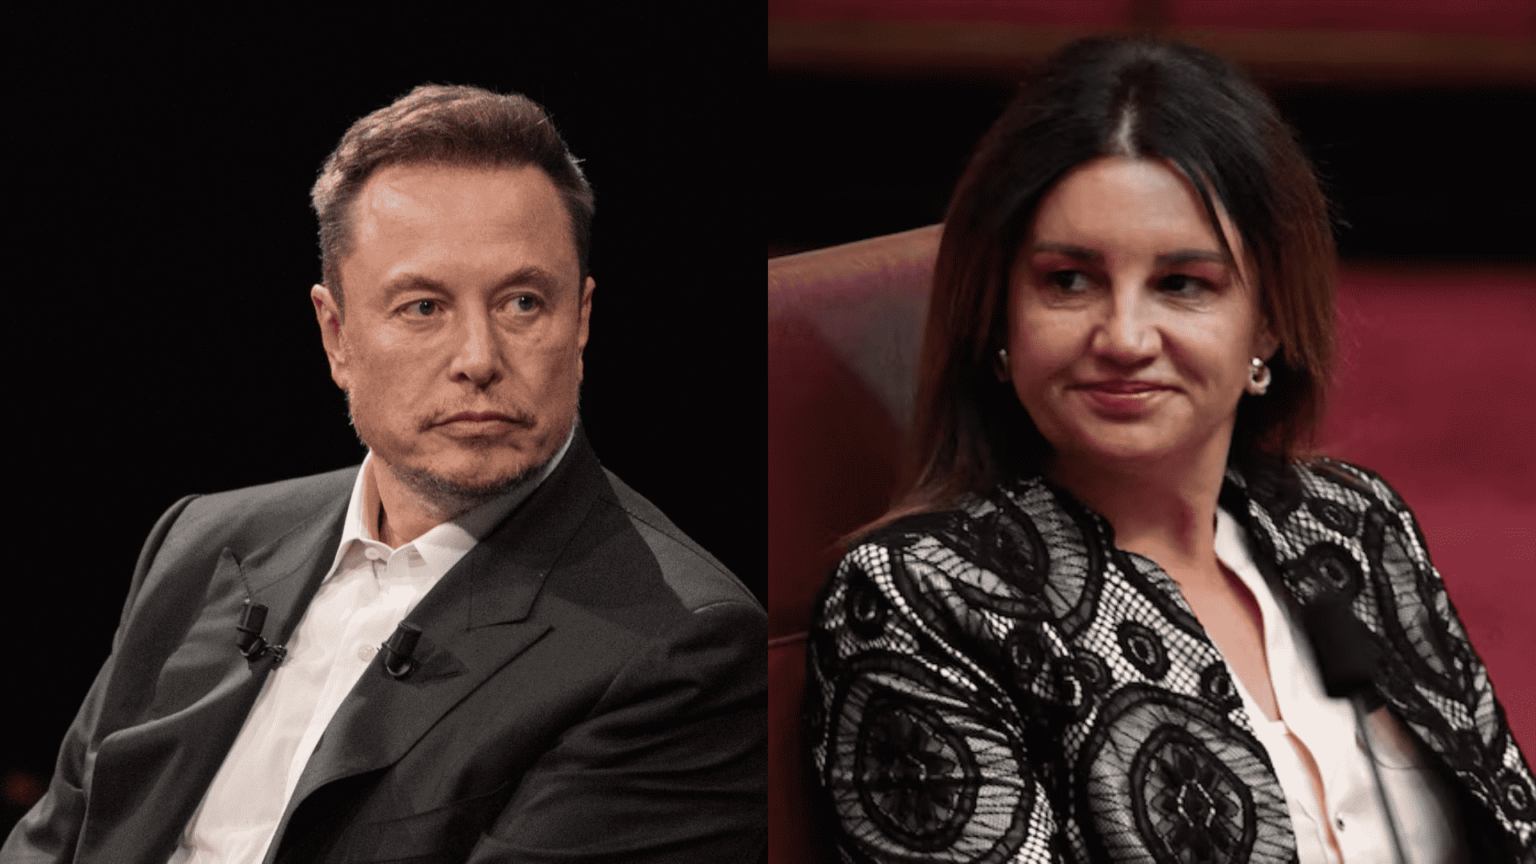 Elon Musk and Jacqui Lambie: A Clash of Ideologies